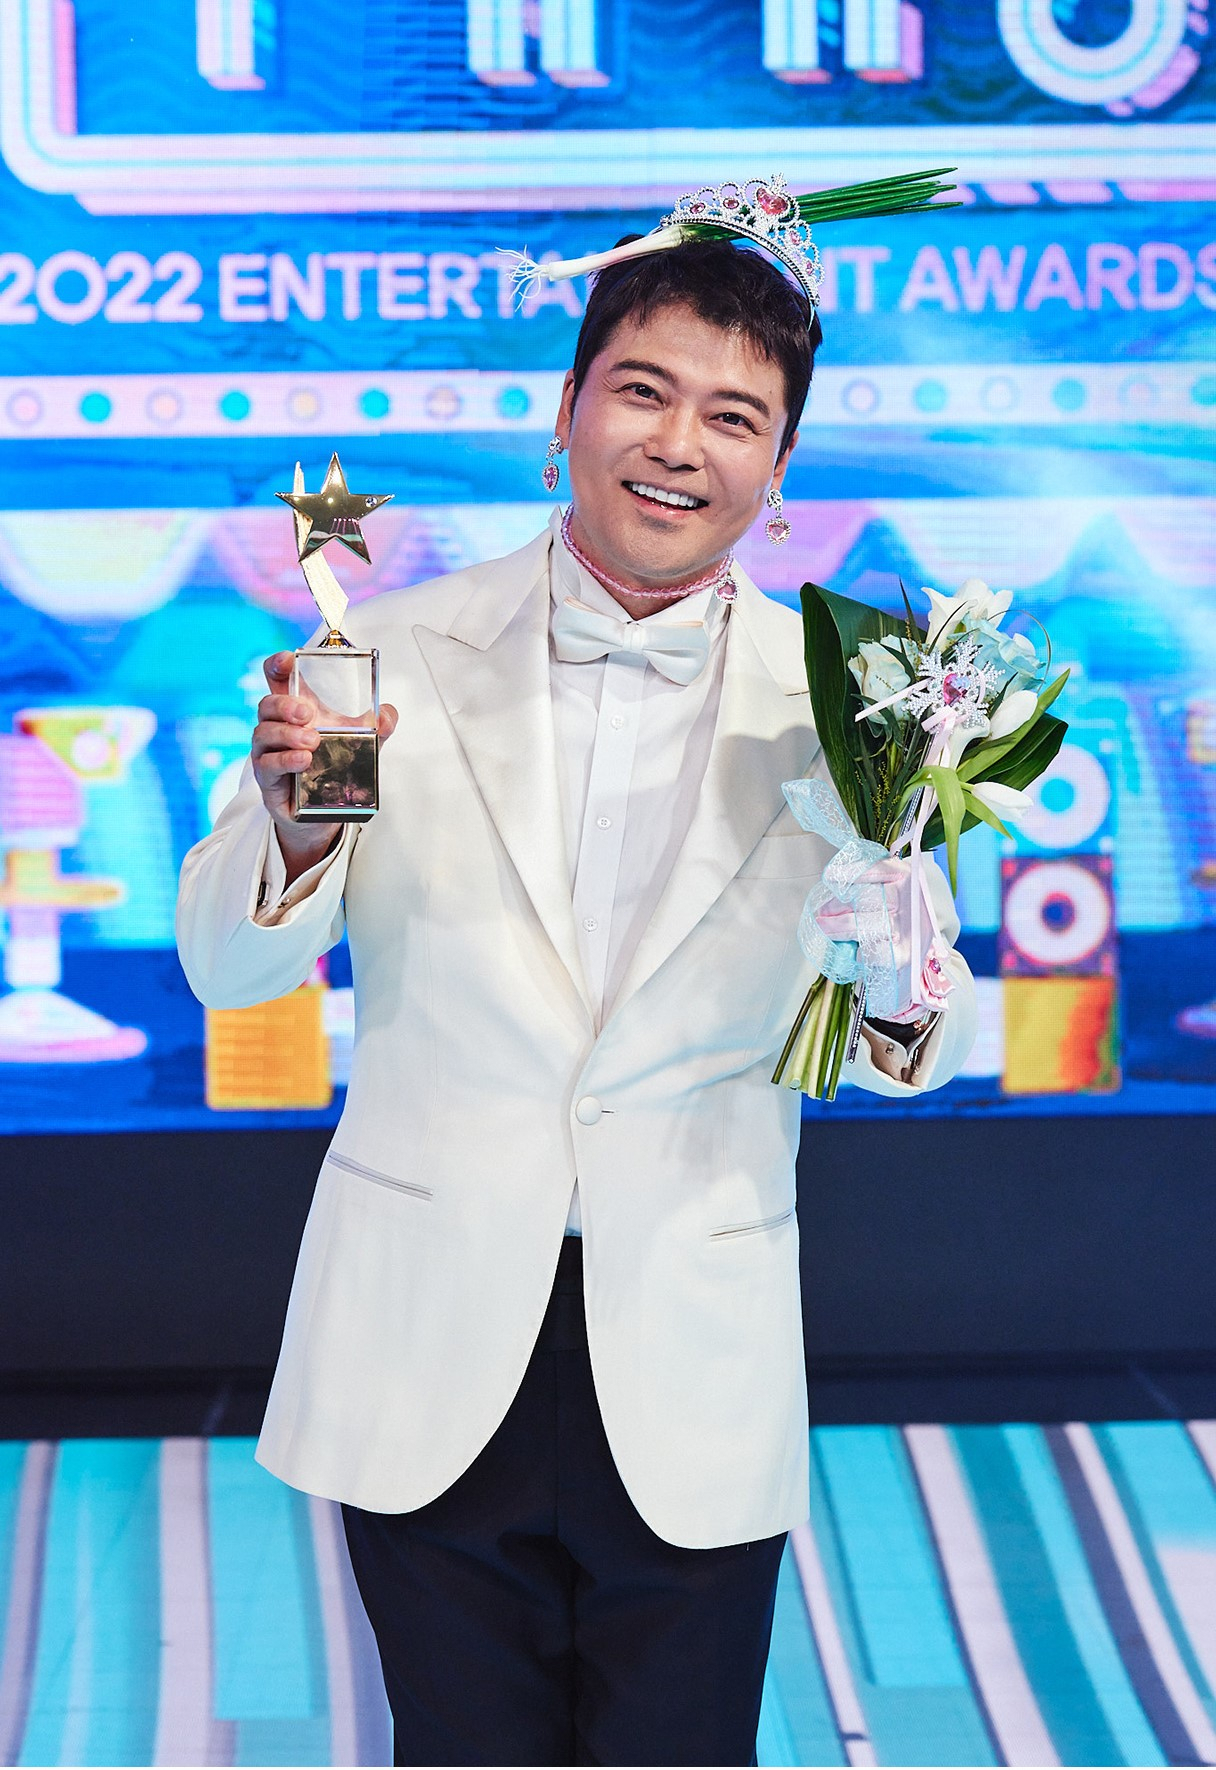 Jeon Hyunmoo wins his 2nd grand prize at MBC Entertainment Awards